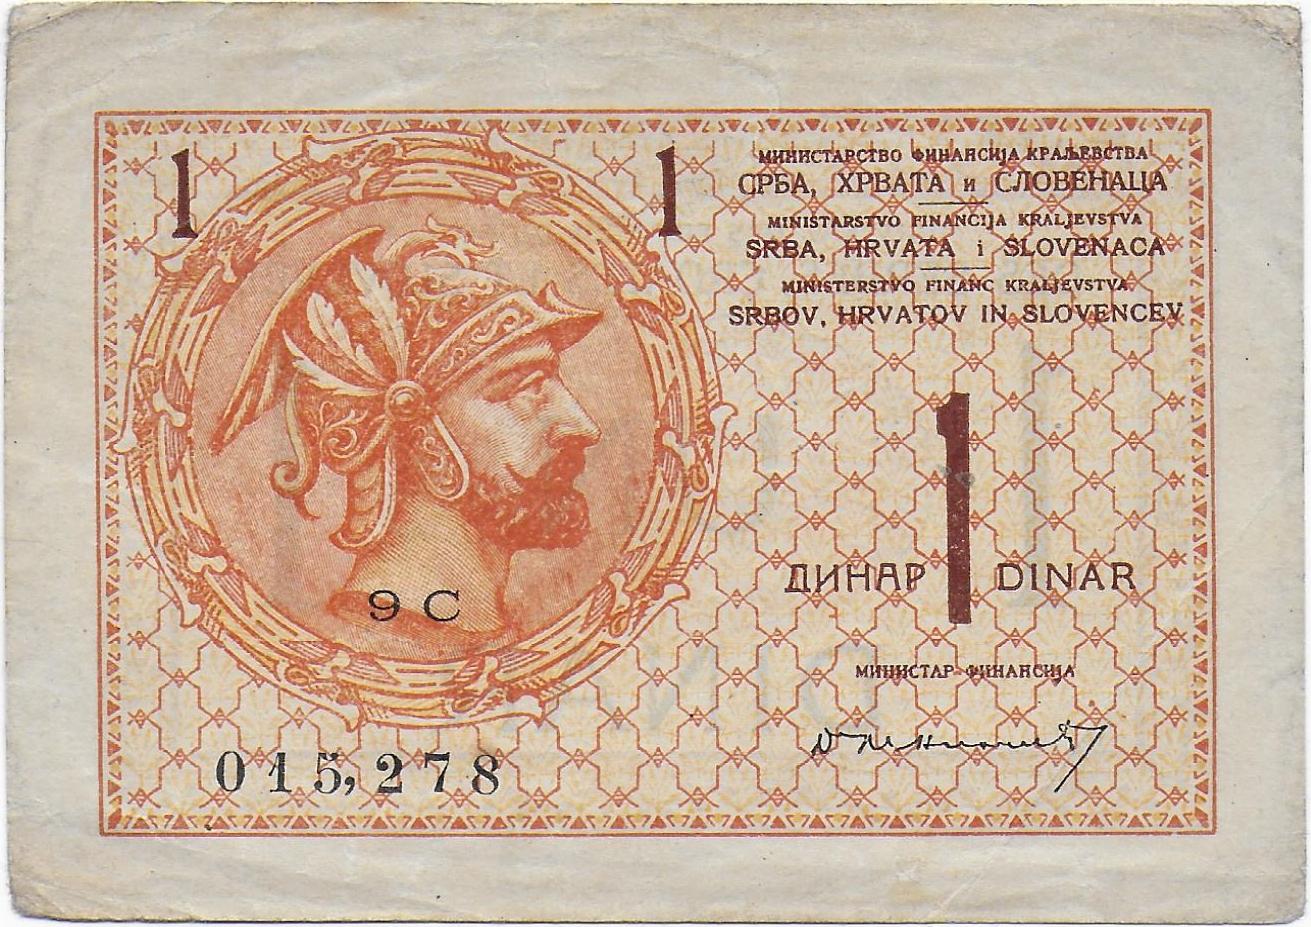 YUGOSLAVIA  KINGDOM  1 Dinar   ND (1919)   P.12 front.jpg